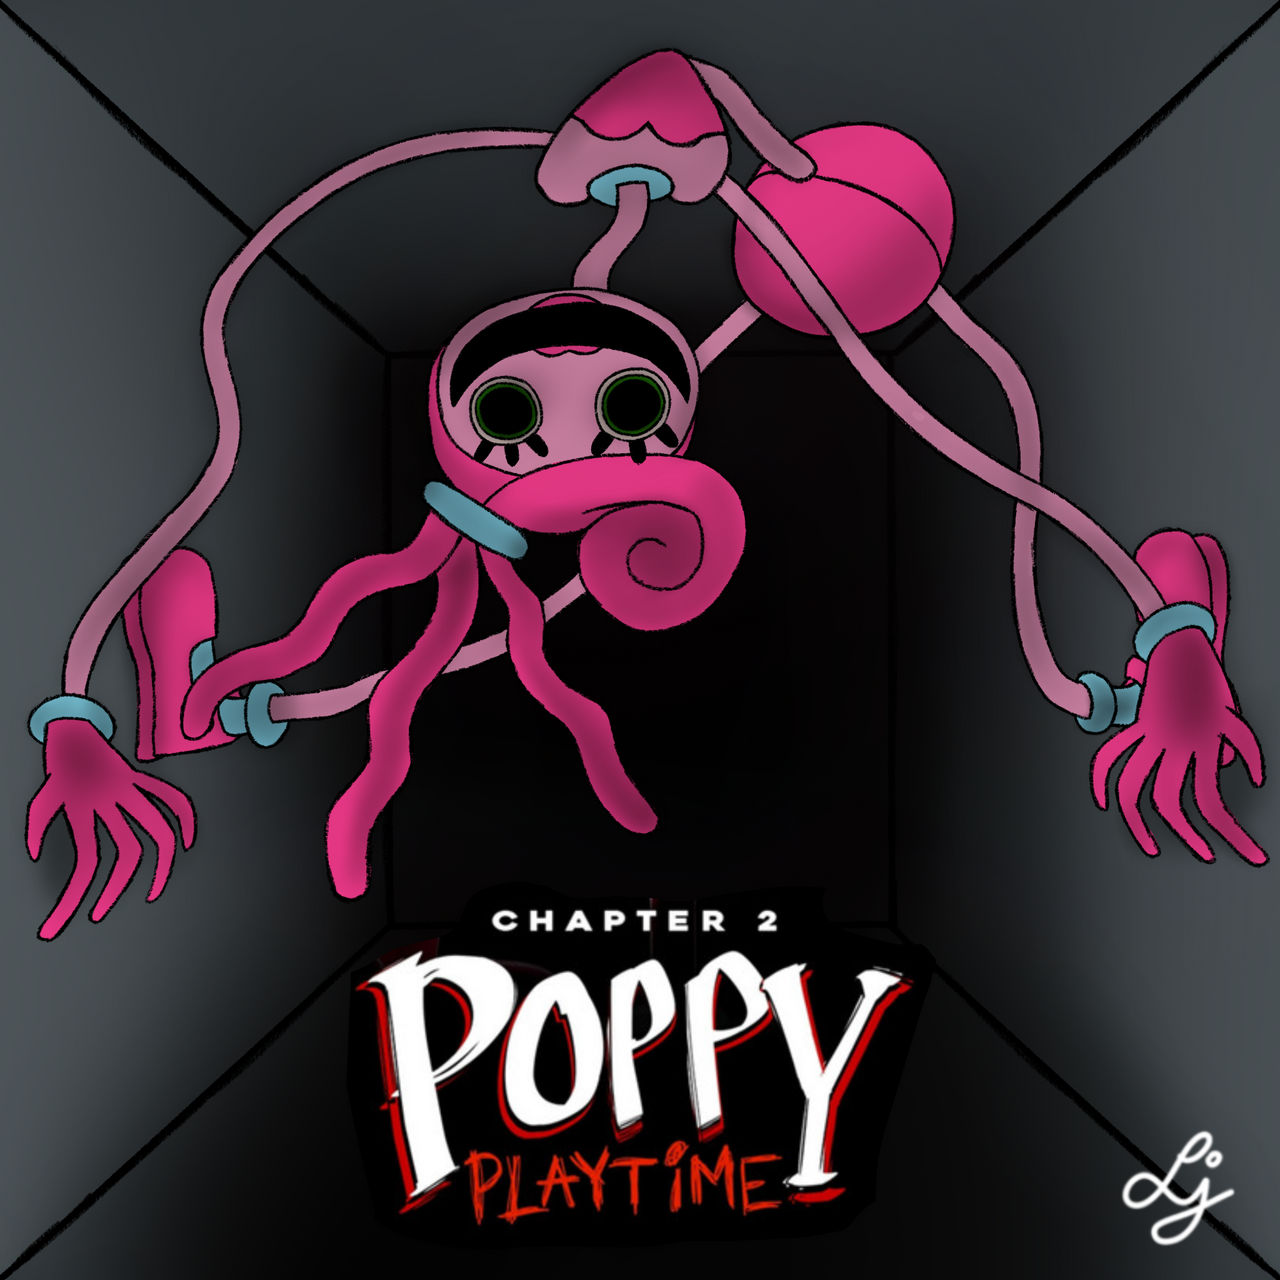 PoppyPlaytime Chapter 2 Mommy Long legs and Family by LGATR on DeviantArt